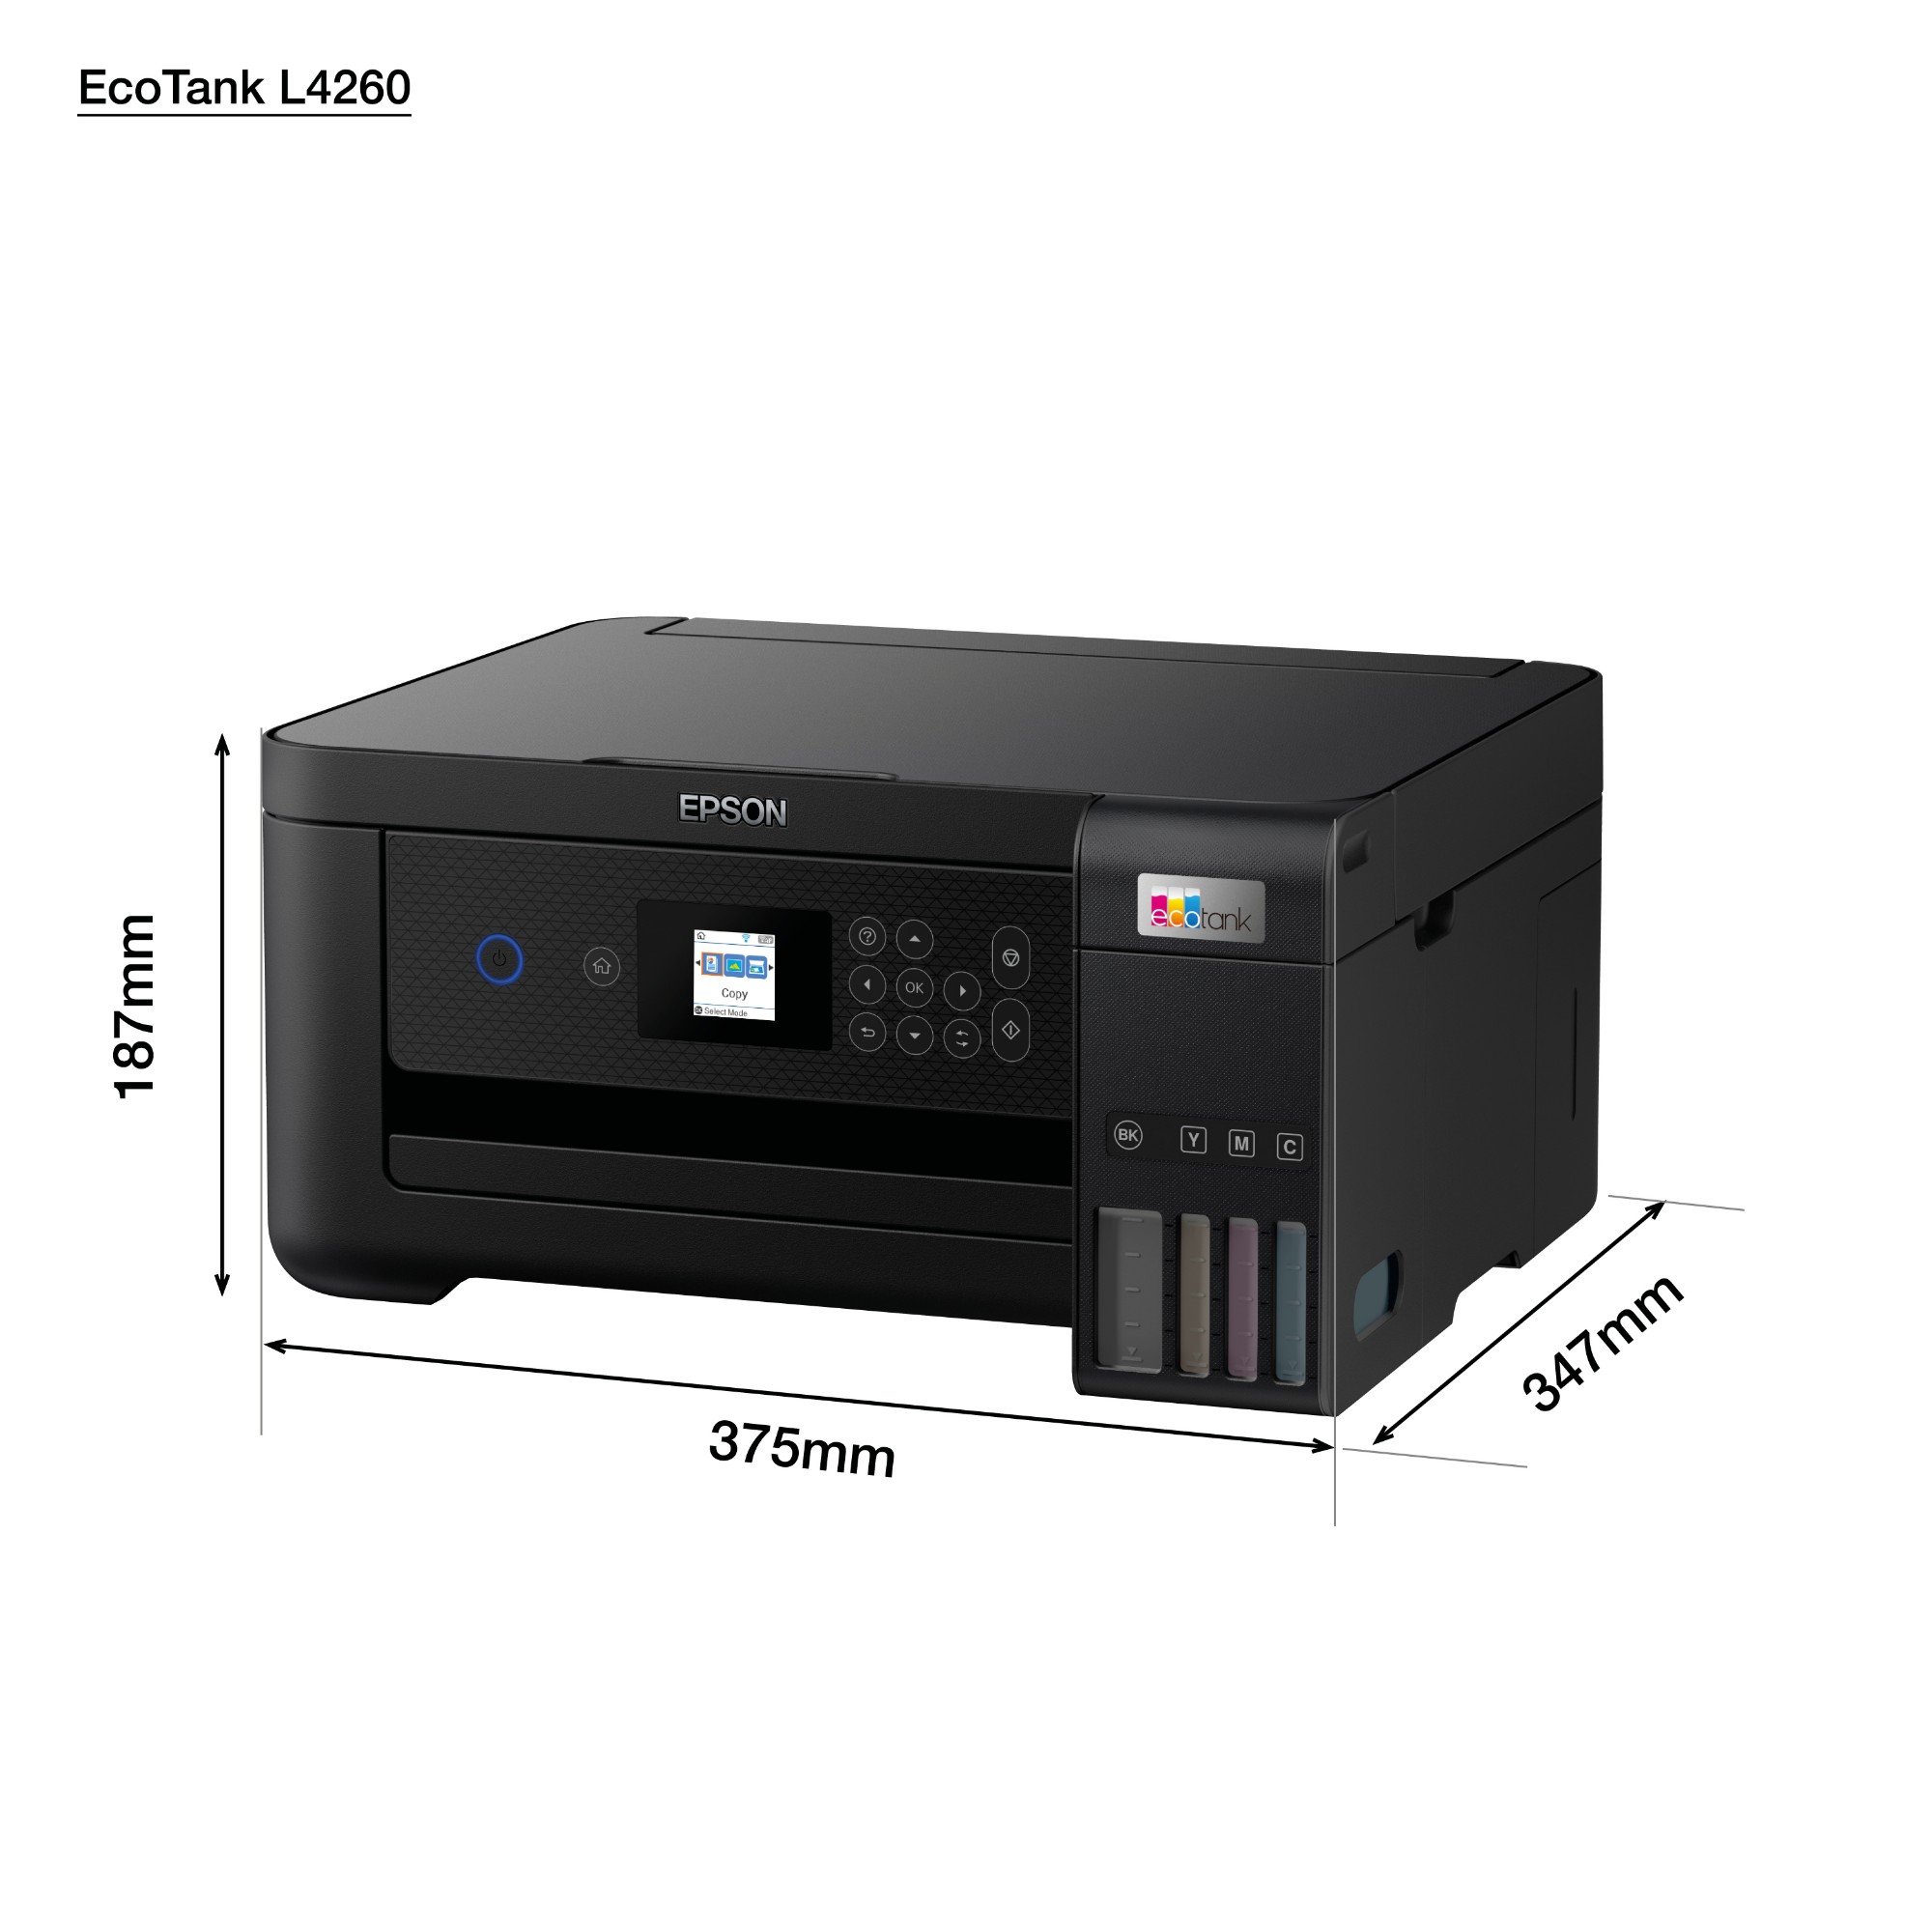 Impresora Multifuncional Epson L4260 Wi-Fi / USB 2.0 - C11CJ63301